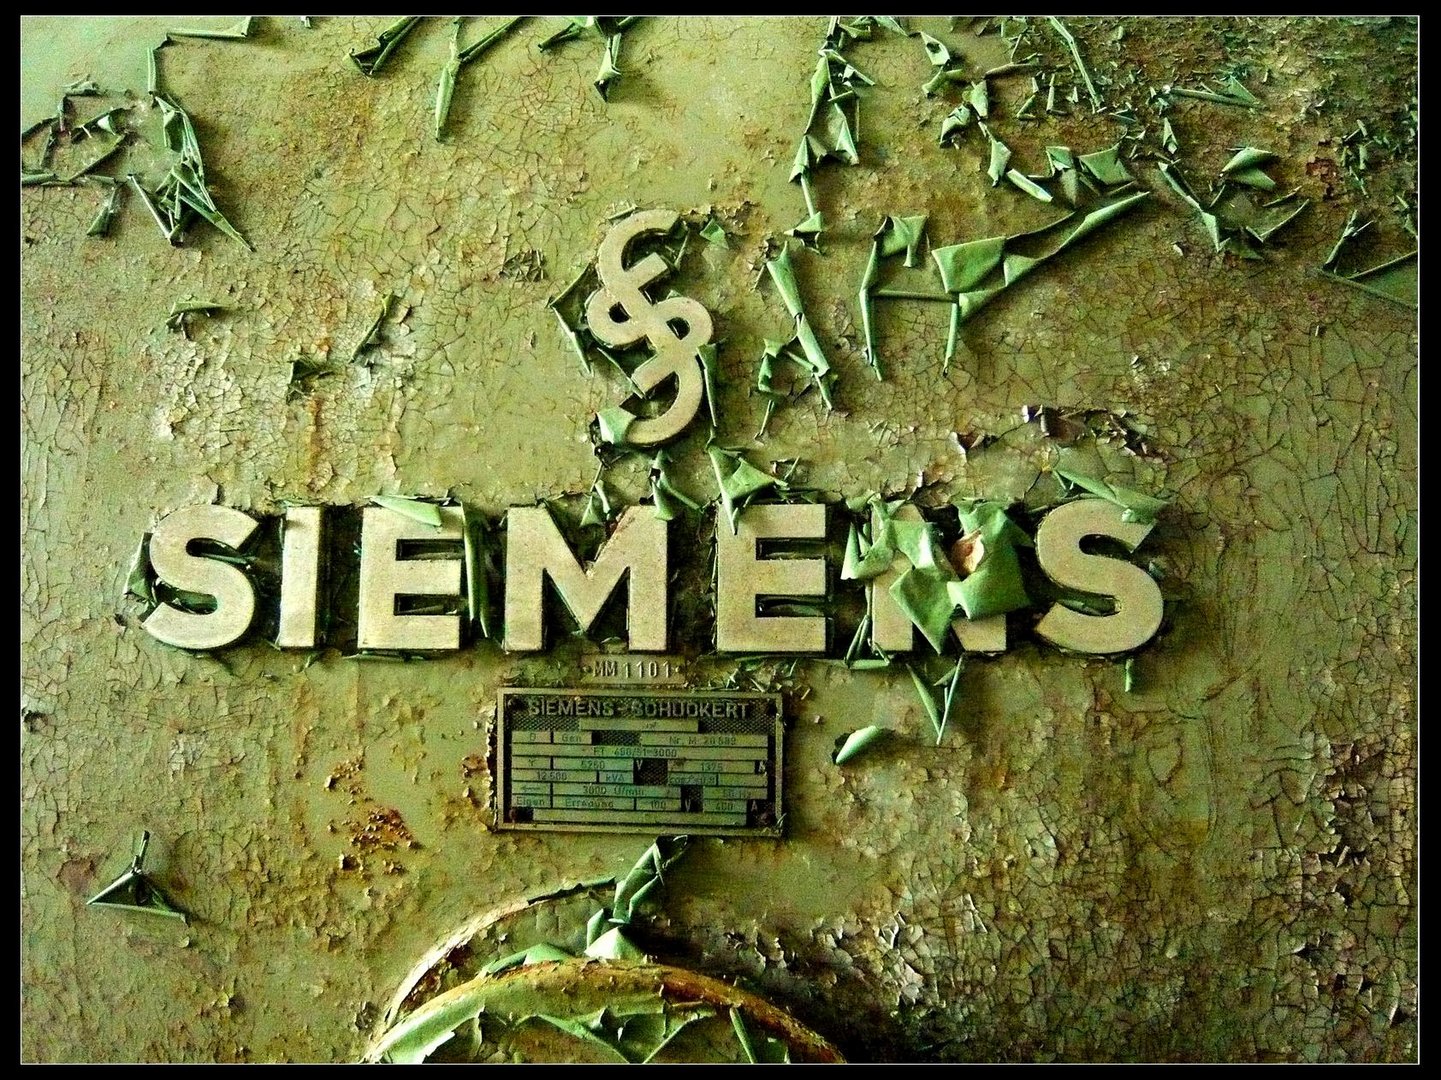 Siemens Schuckert